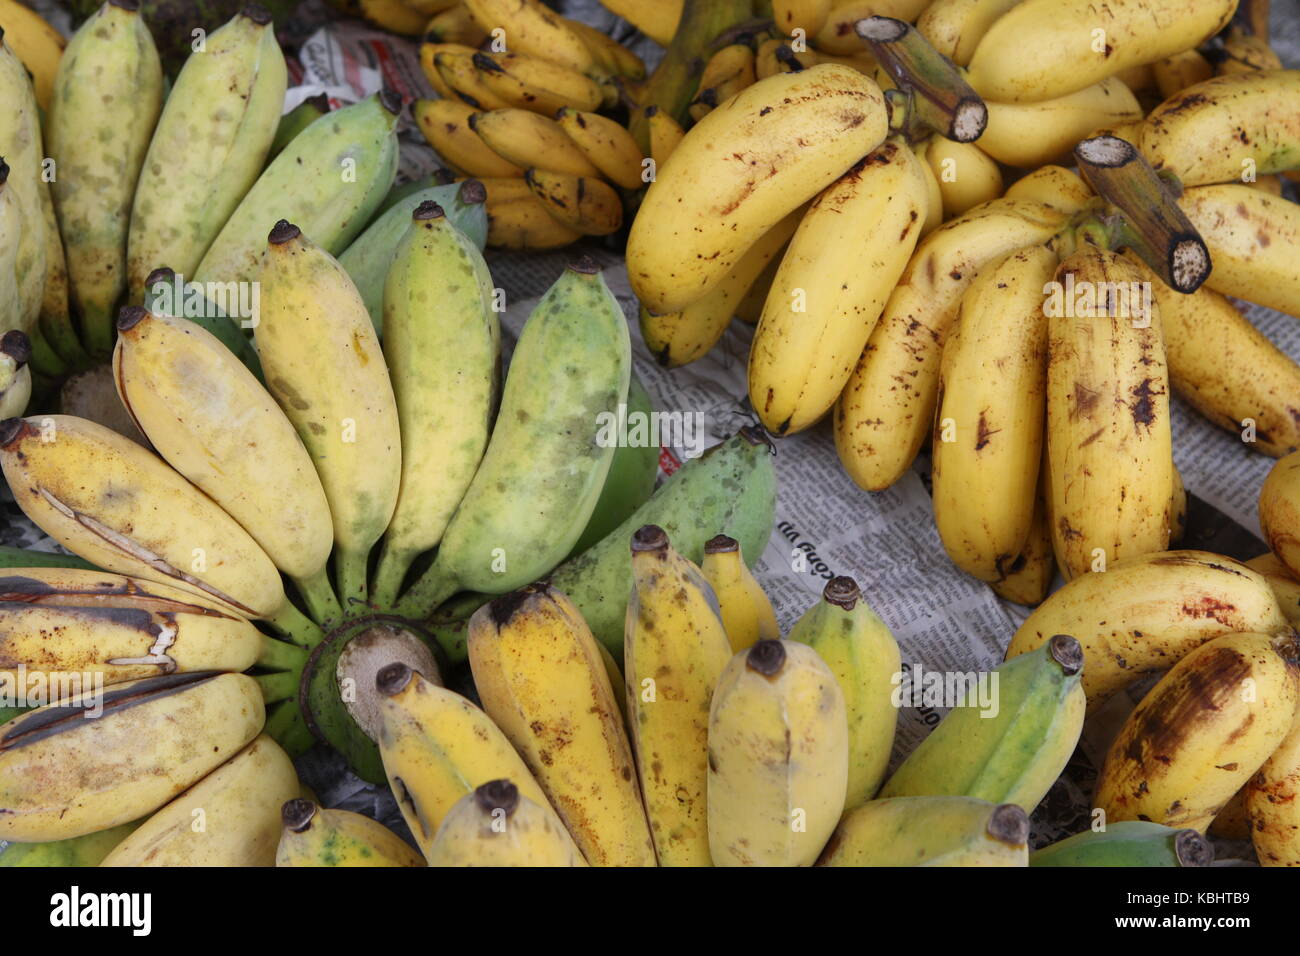 Bananen - Bananas fruits on market Stock Photo